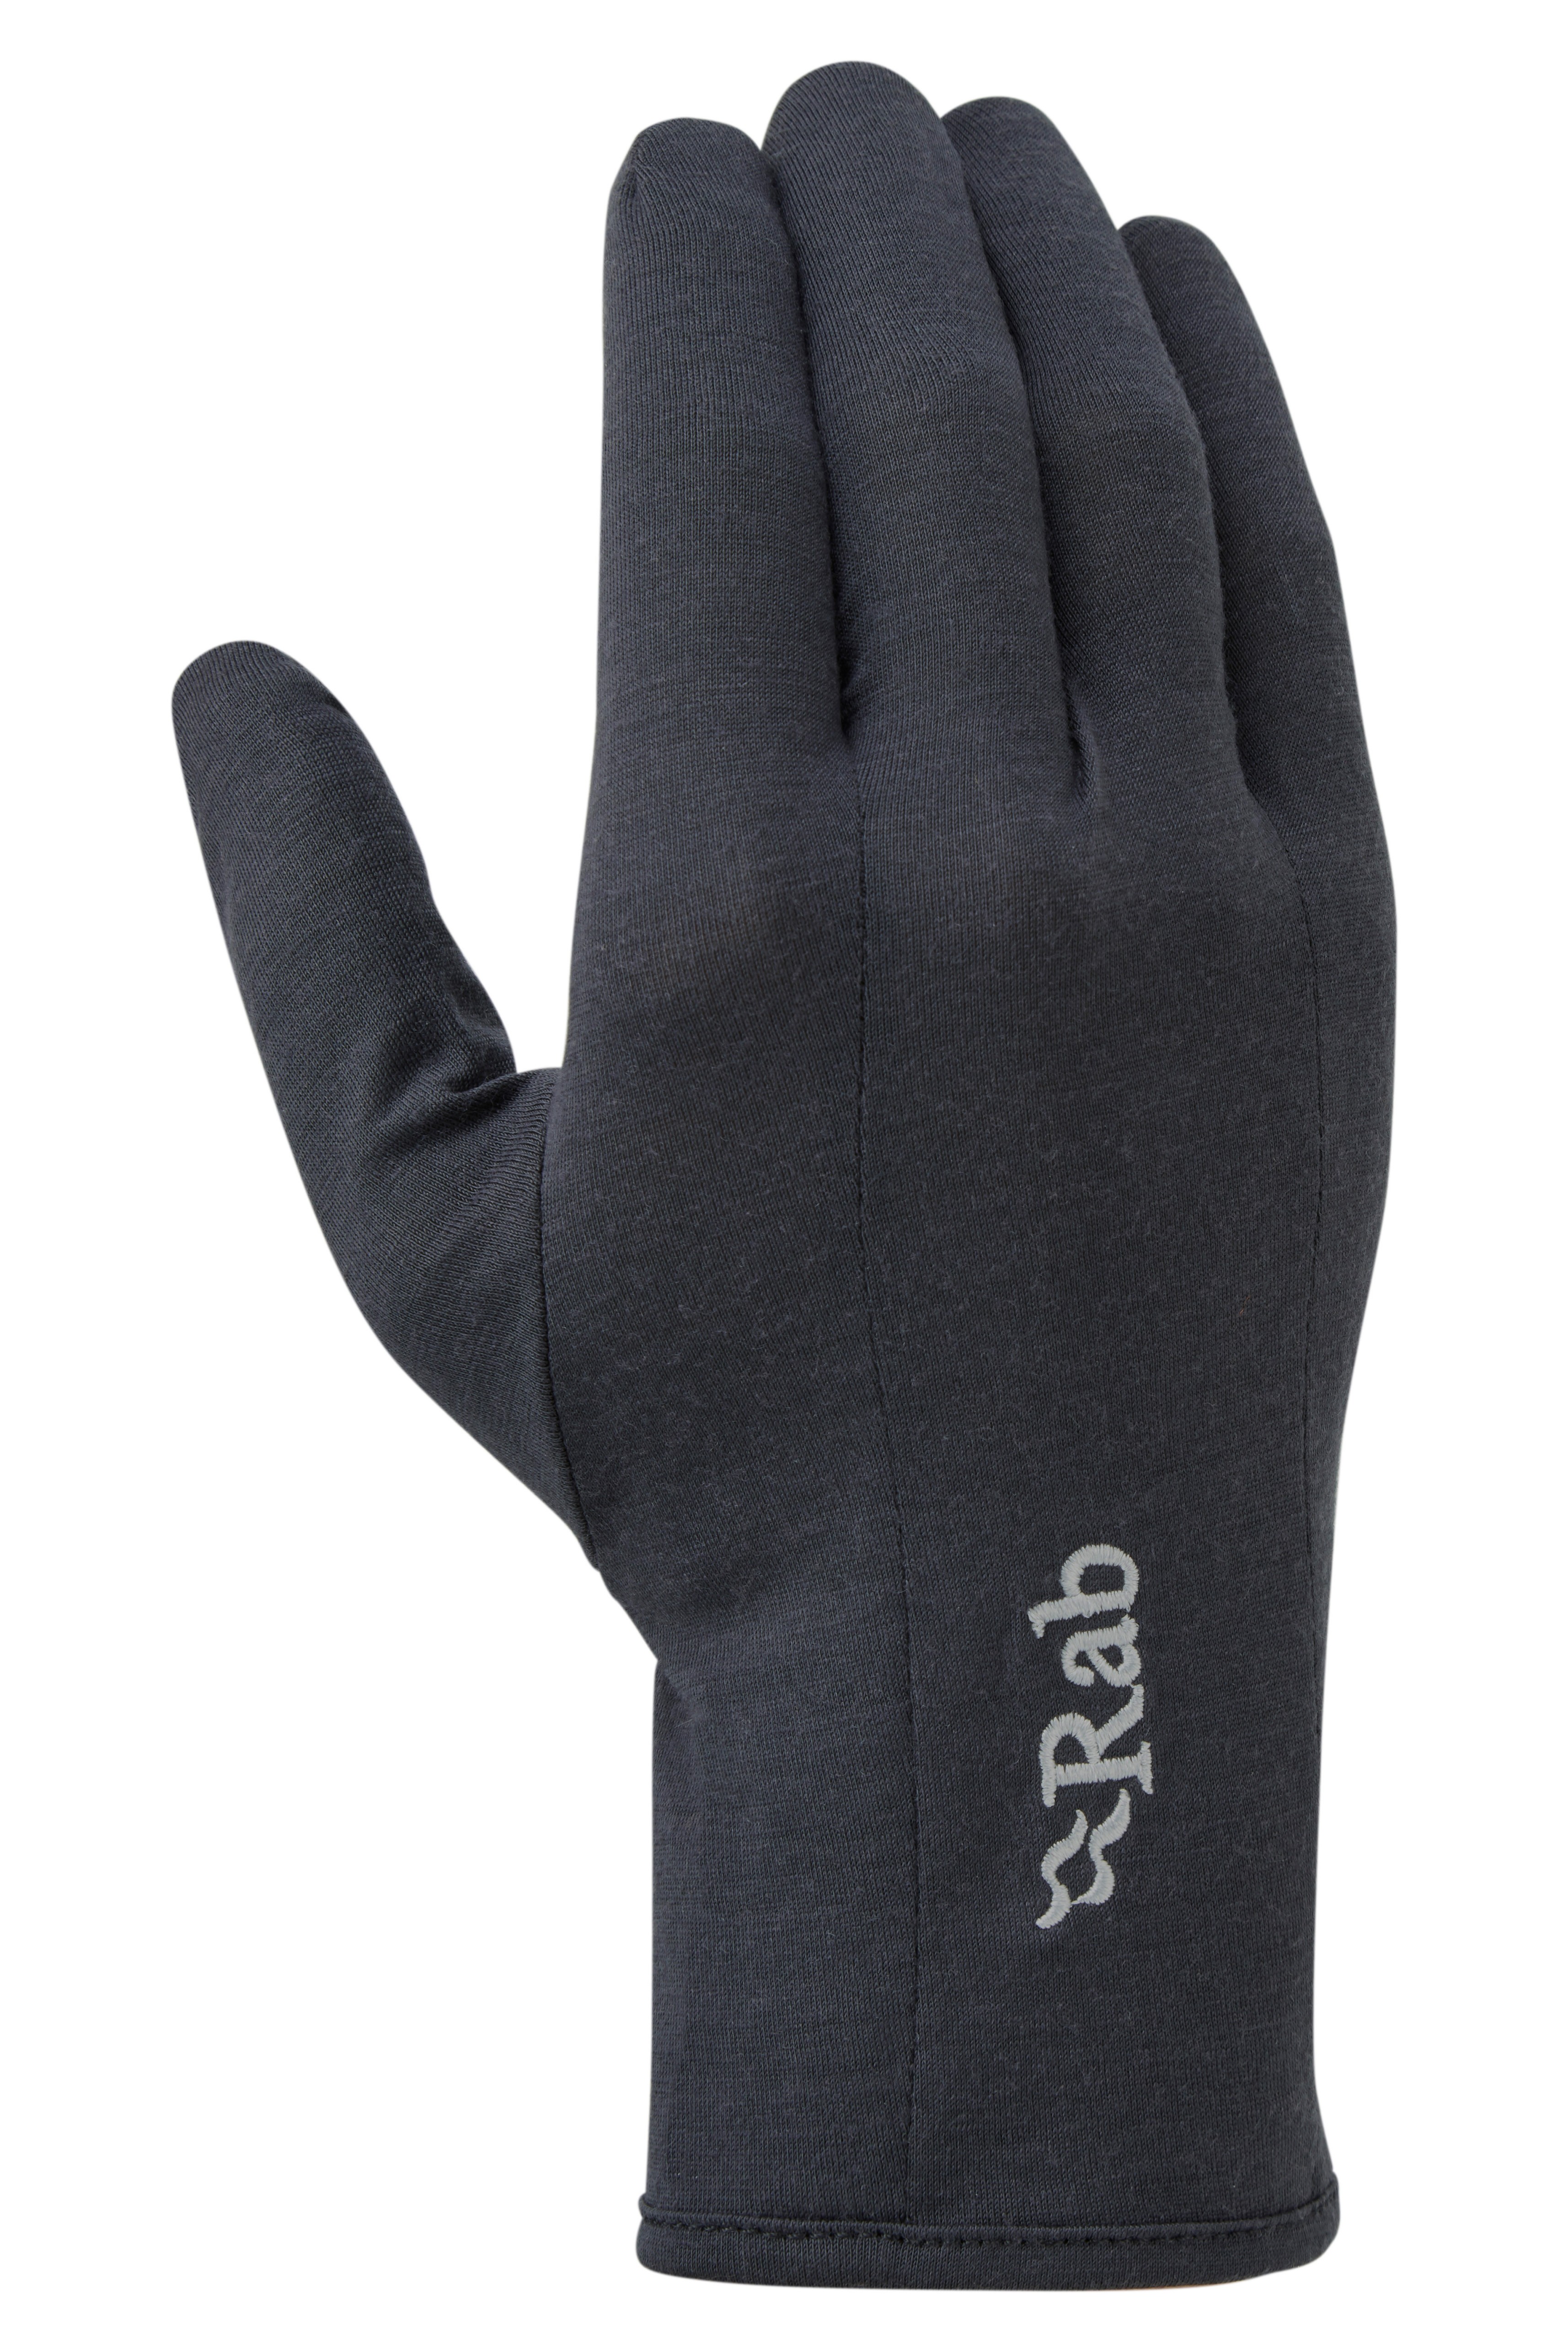 Forge 160 Glove, ebony